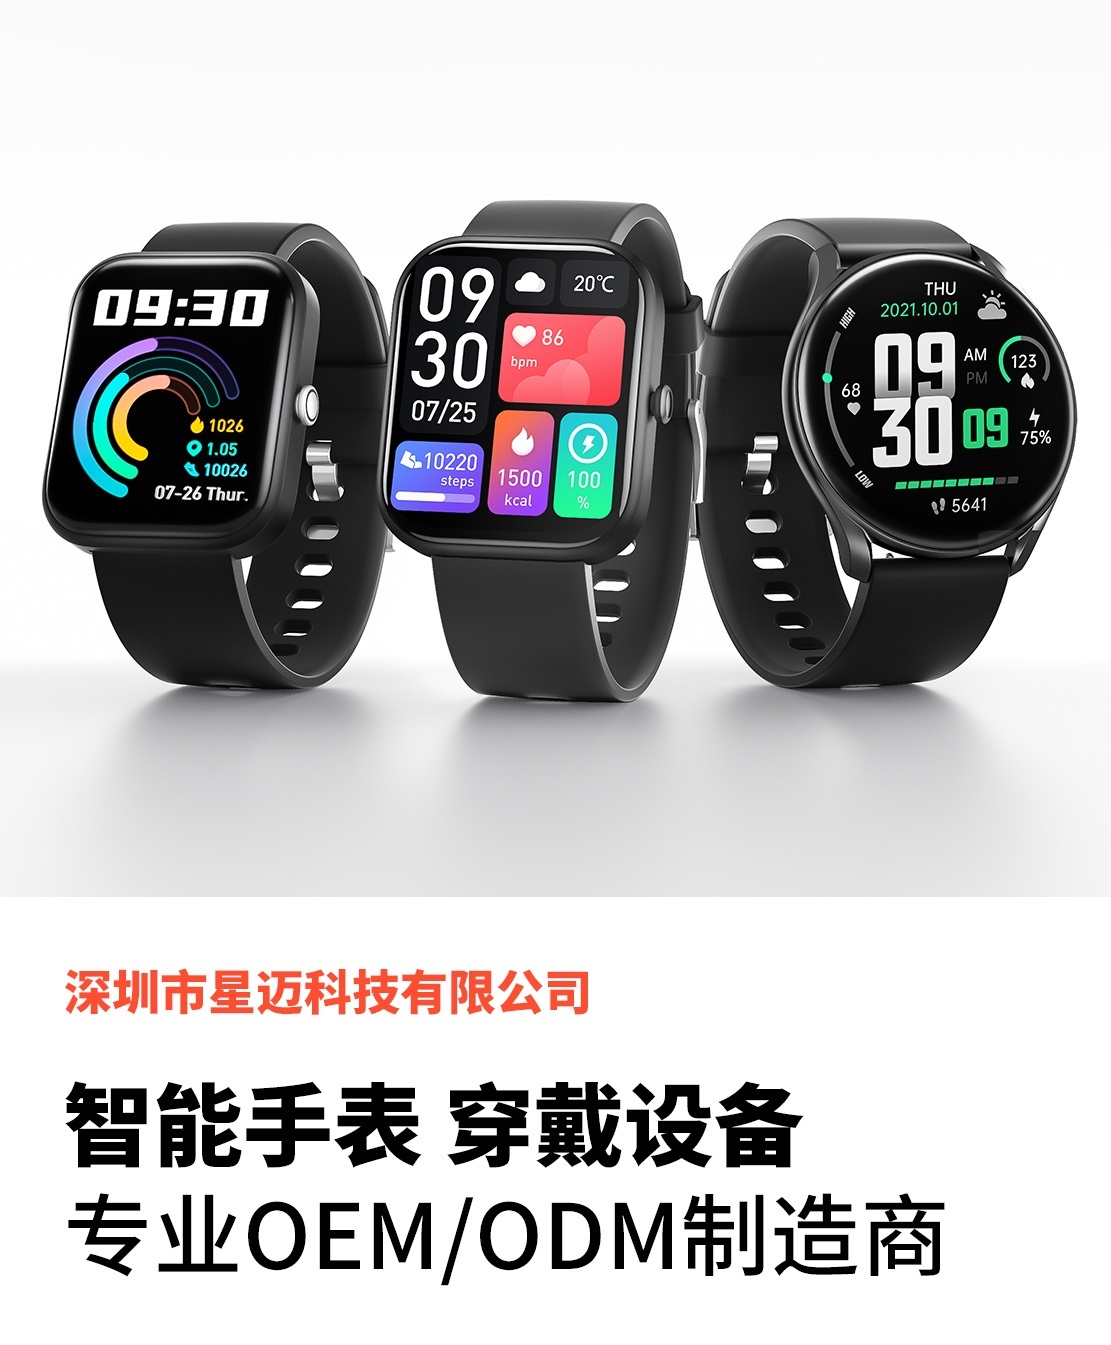 Starmax Smart Watches hero banner 202303 mob.cn